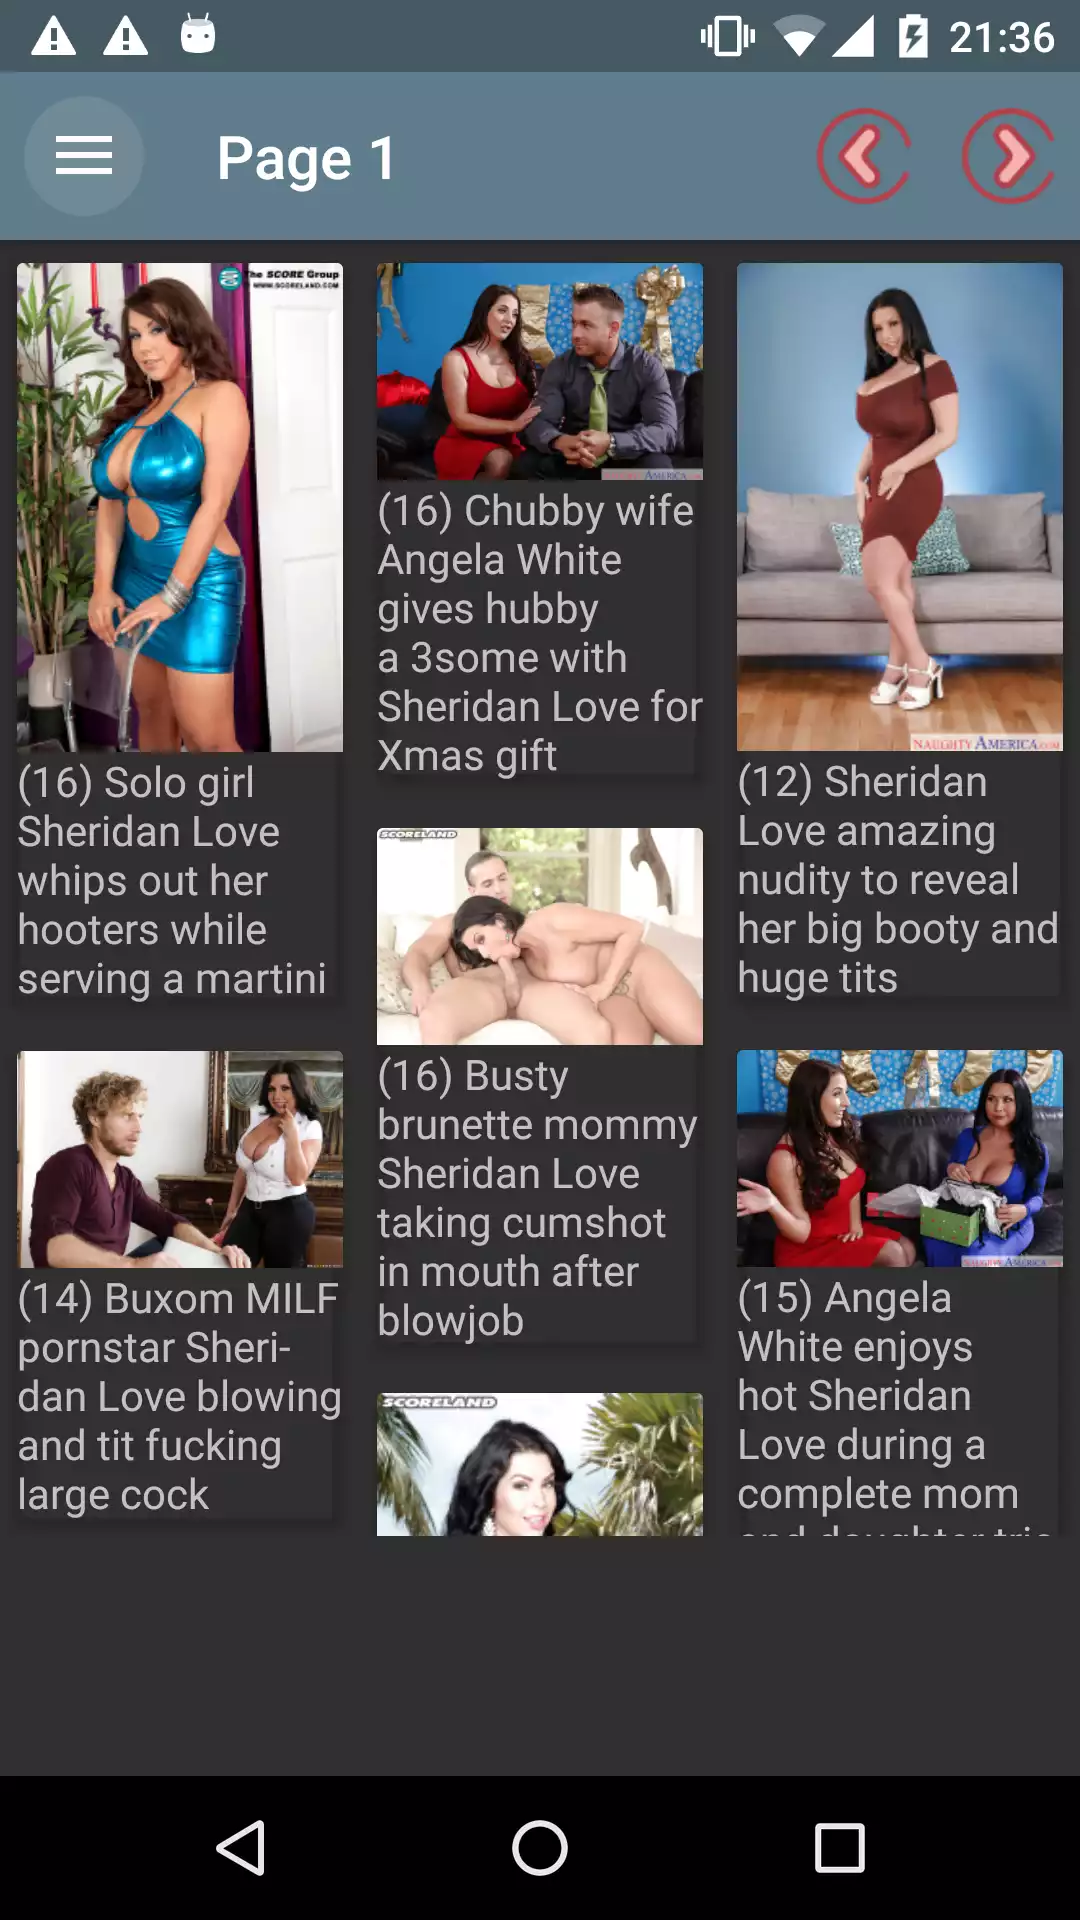 Sheridan Love pic,pics,galleries,hot,apk,aplicativos,picture,comics,app,puzzle,apps,hentai,futanari,sexy,anime,porn,photos,apks